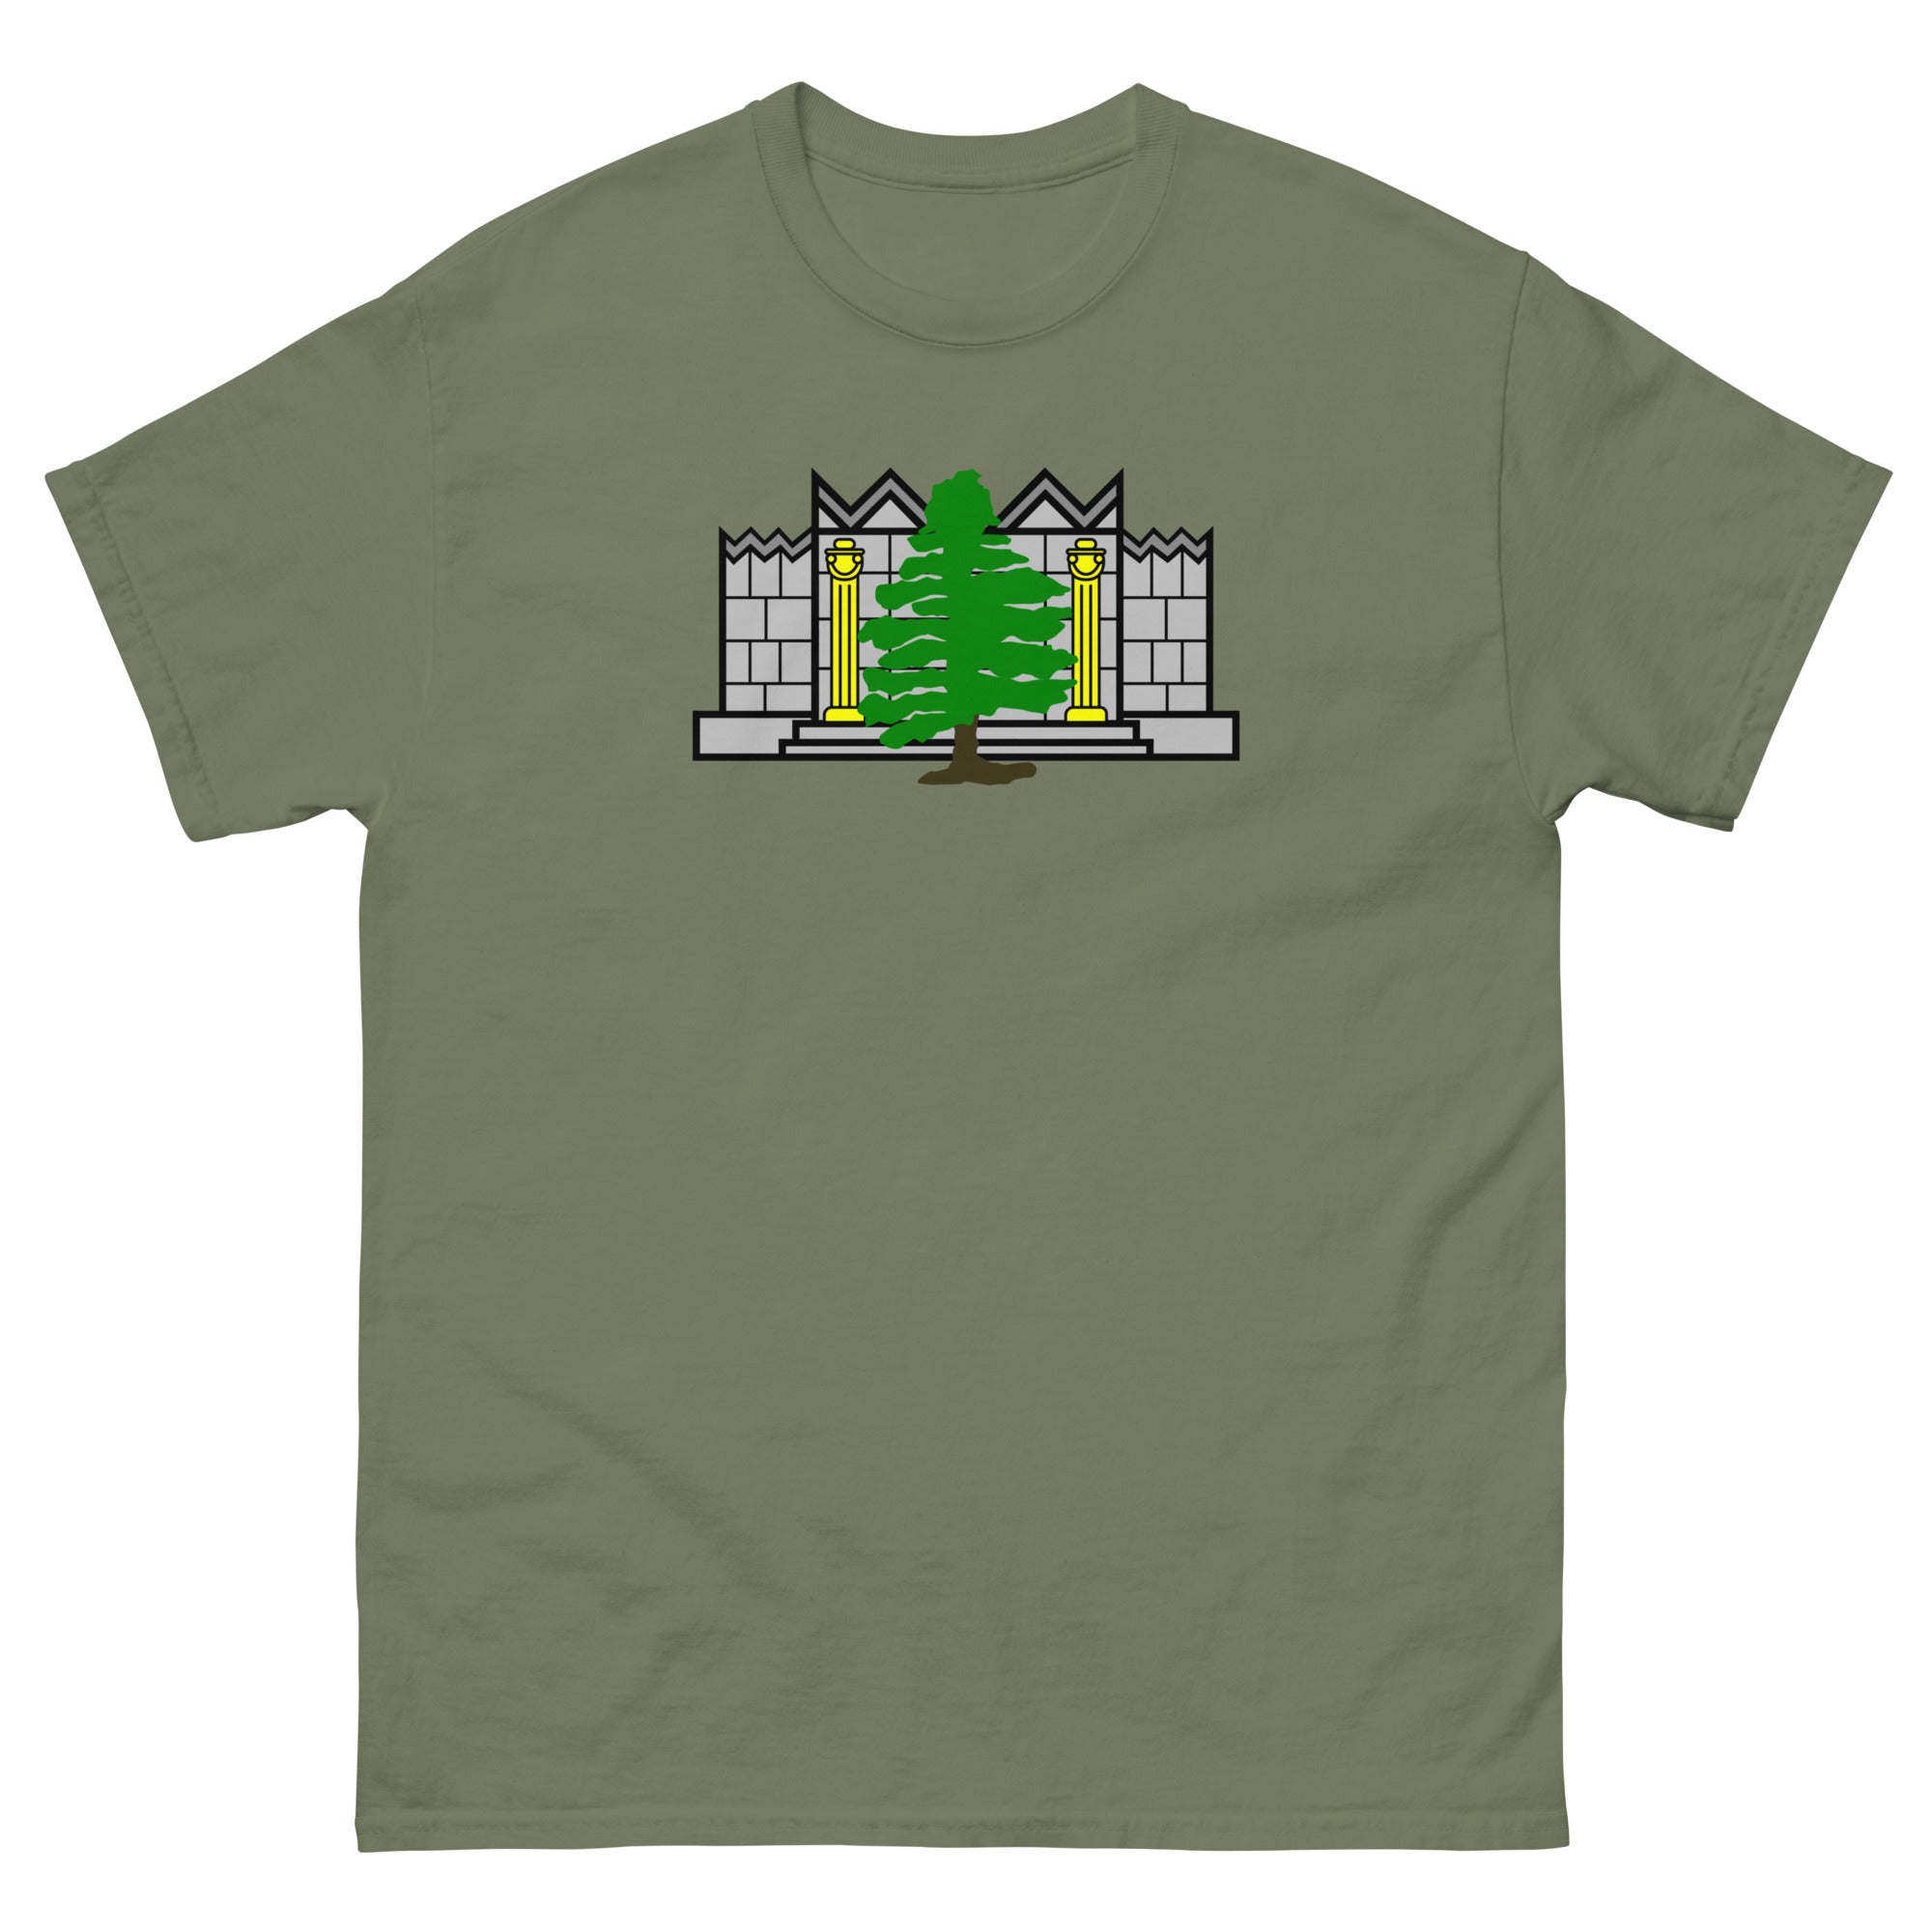 Tall Cedars of Lebanon T-shirt